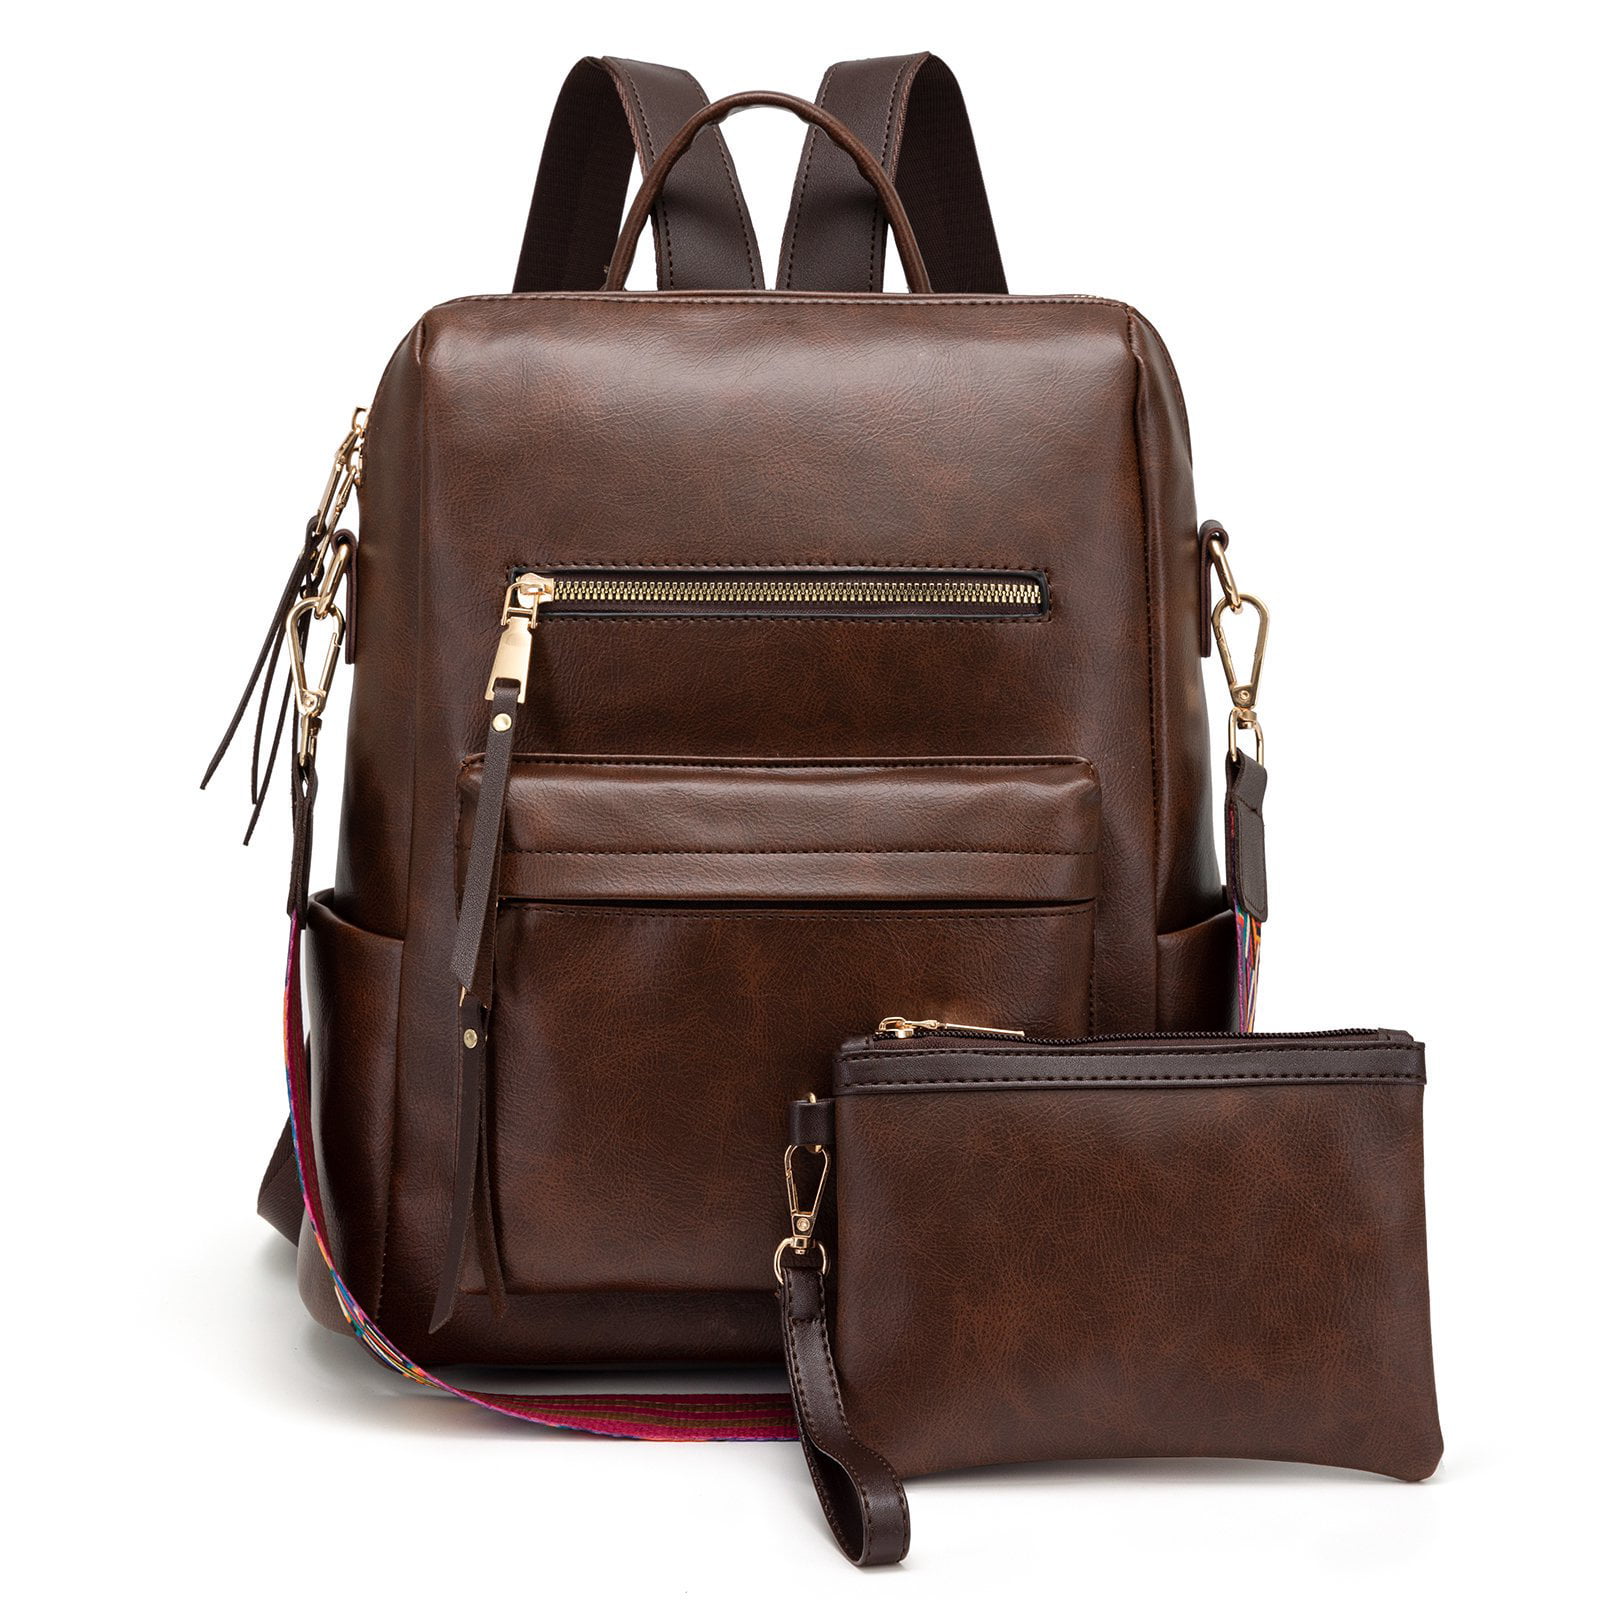 Cheruty Backpacks for Women Fashion PU Leather Bag Design Convertible ...